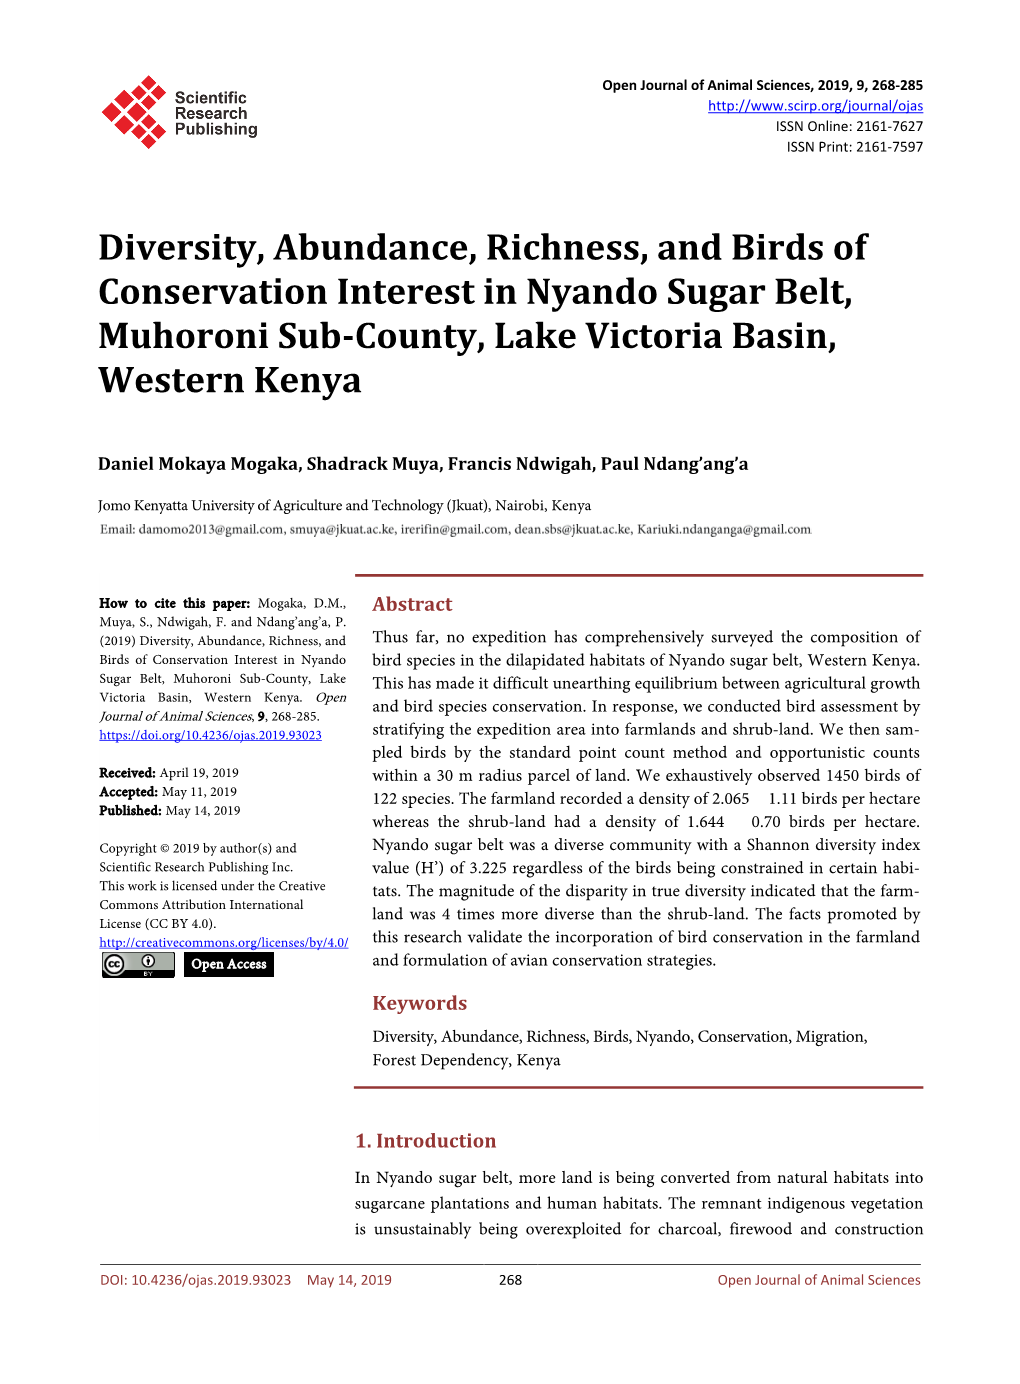 Diversity, Abundance, Richness, and Birds of Conservation Interest in Nyando Sugar Belt, Muhoroni Sub-County, Lake Victoria Basin, Western Kenya